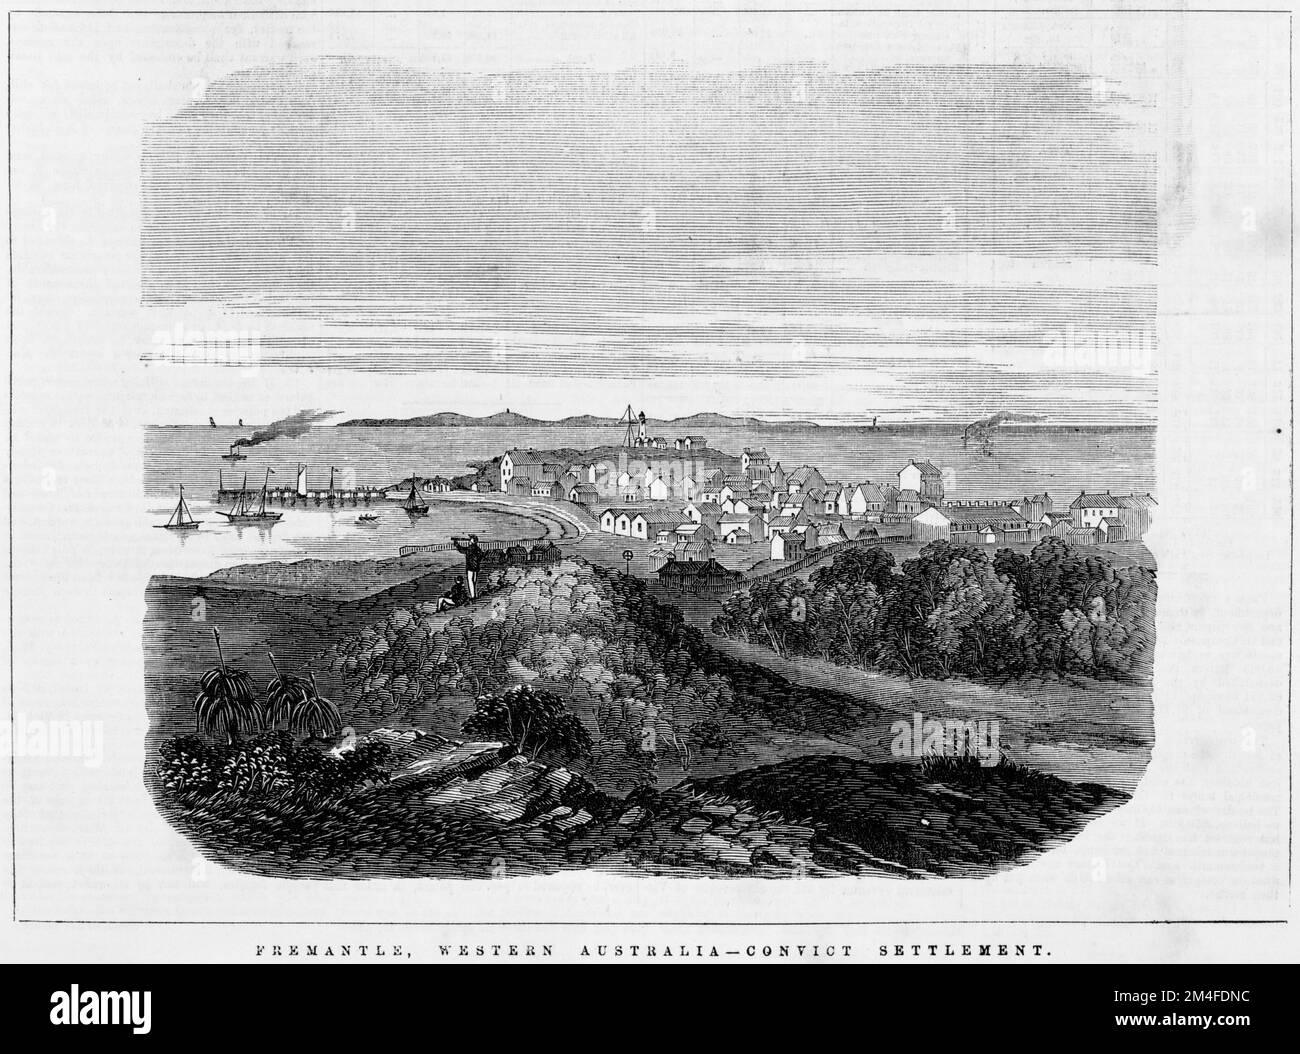 Fremantle, Australia Occidentale - Convict Settlement. 1863. Foto Stock